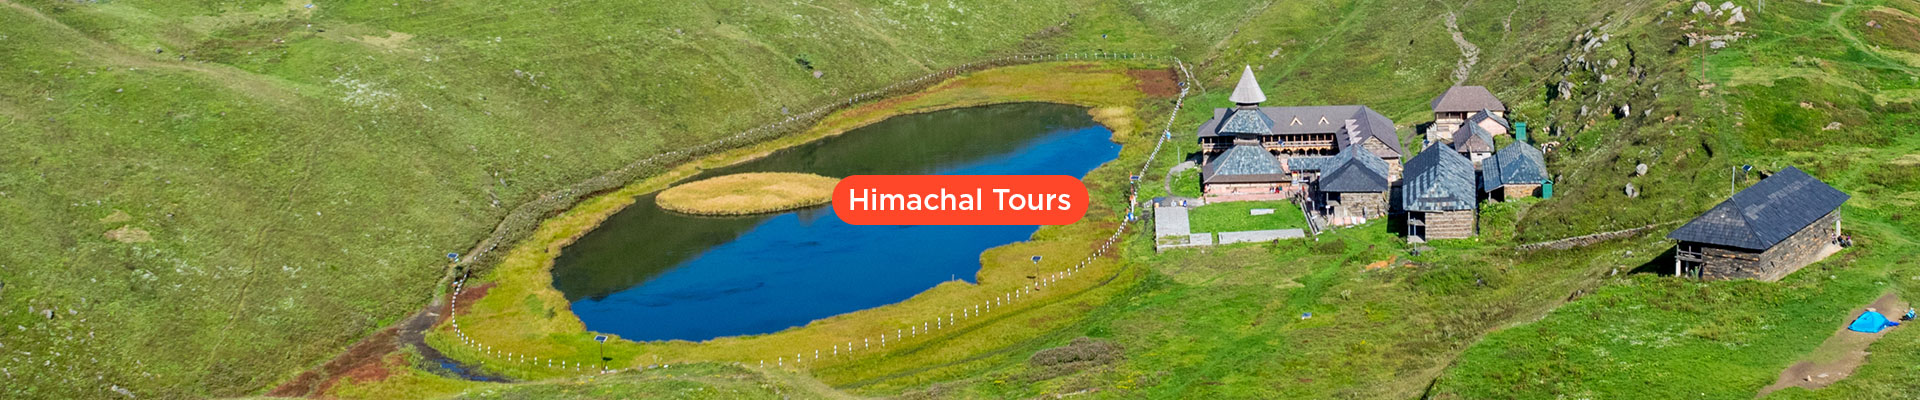 himachal pradesh Tours